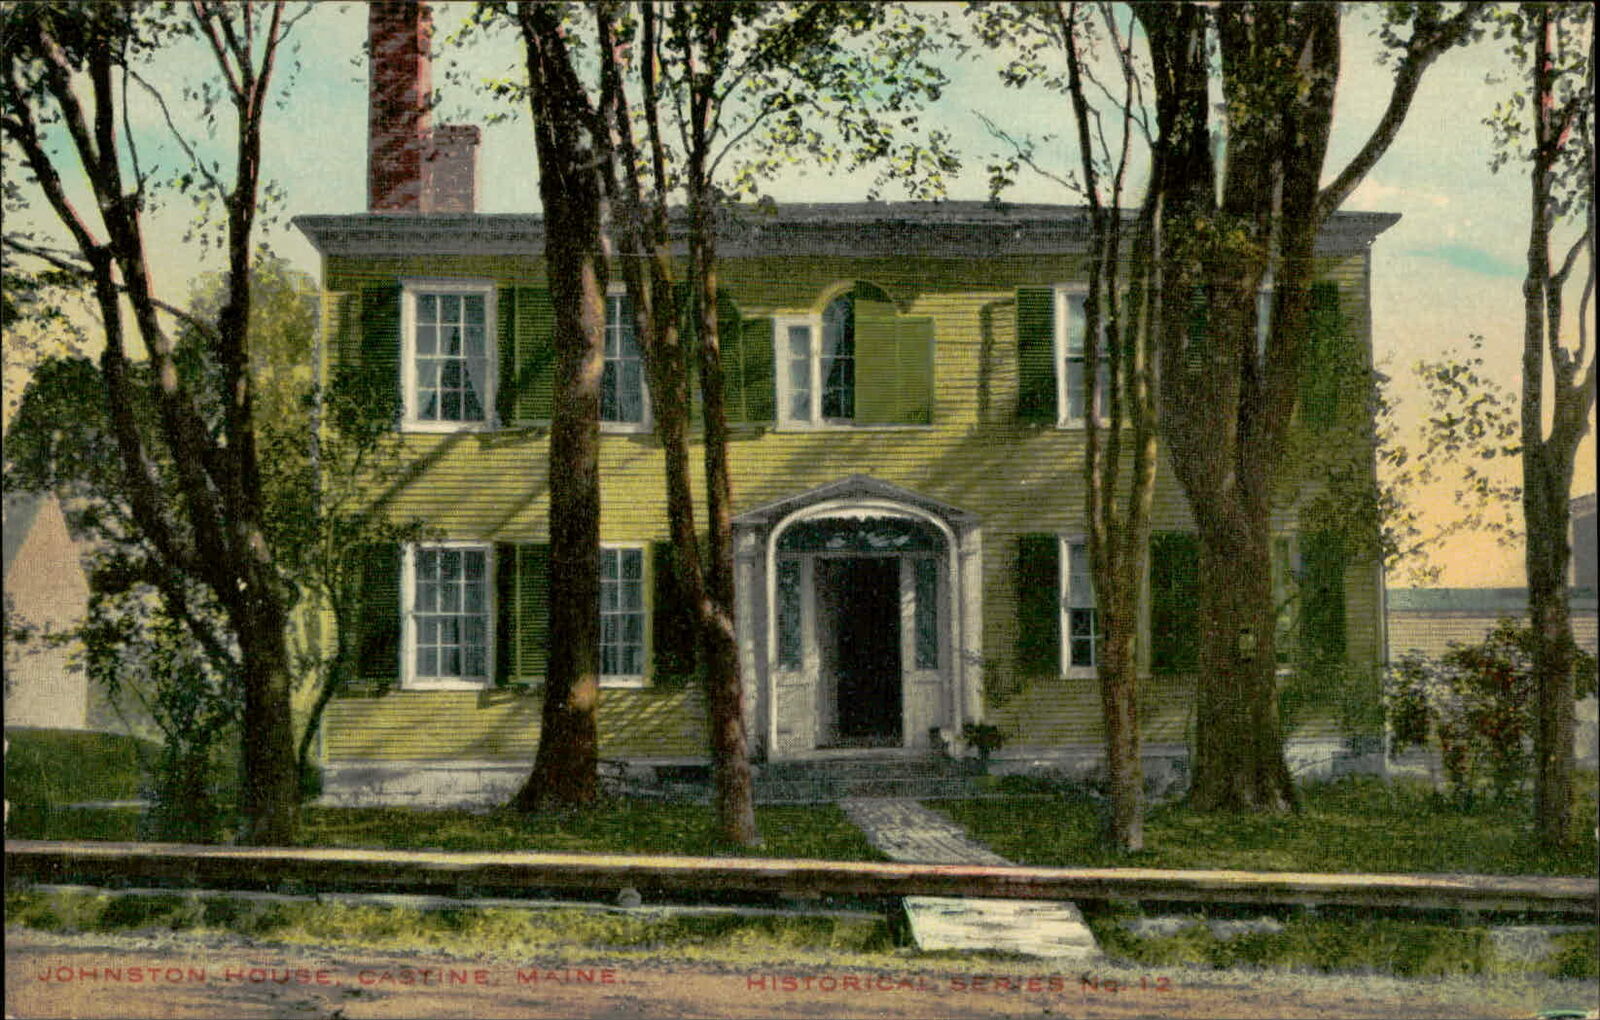 Postcard: JOHNSTON HOUSE CASTINE, MAINE HISTOR